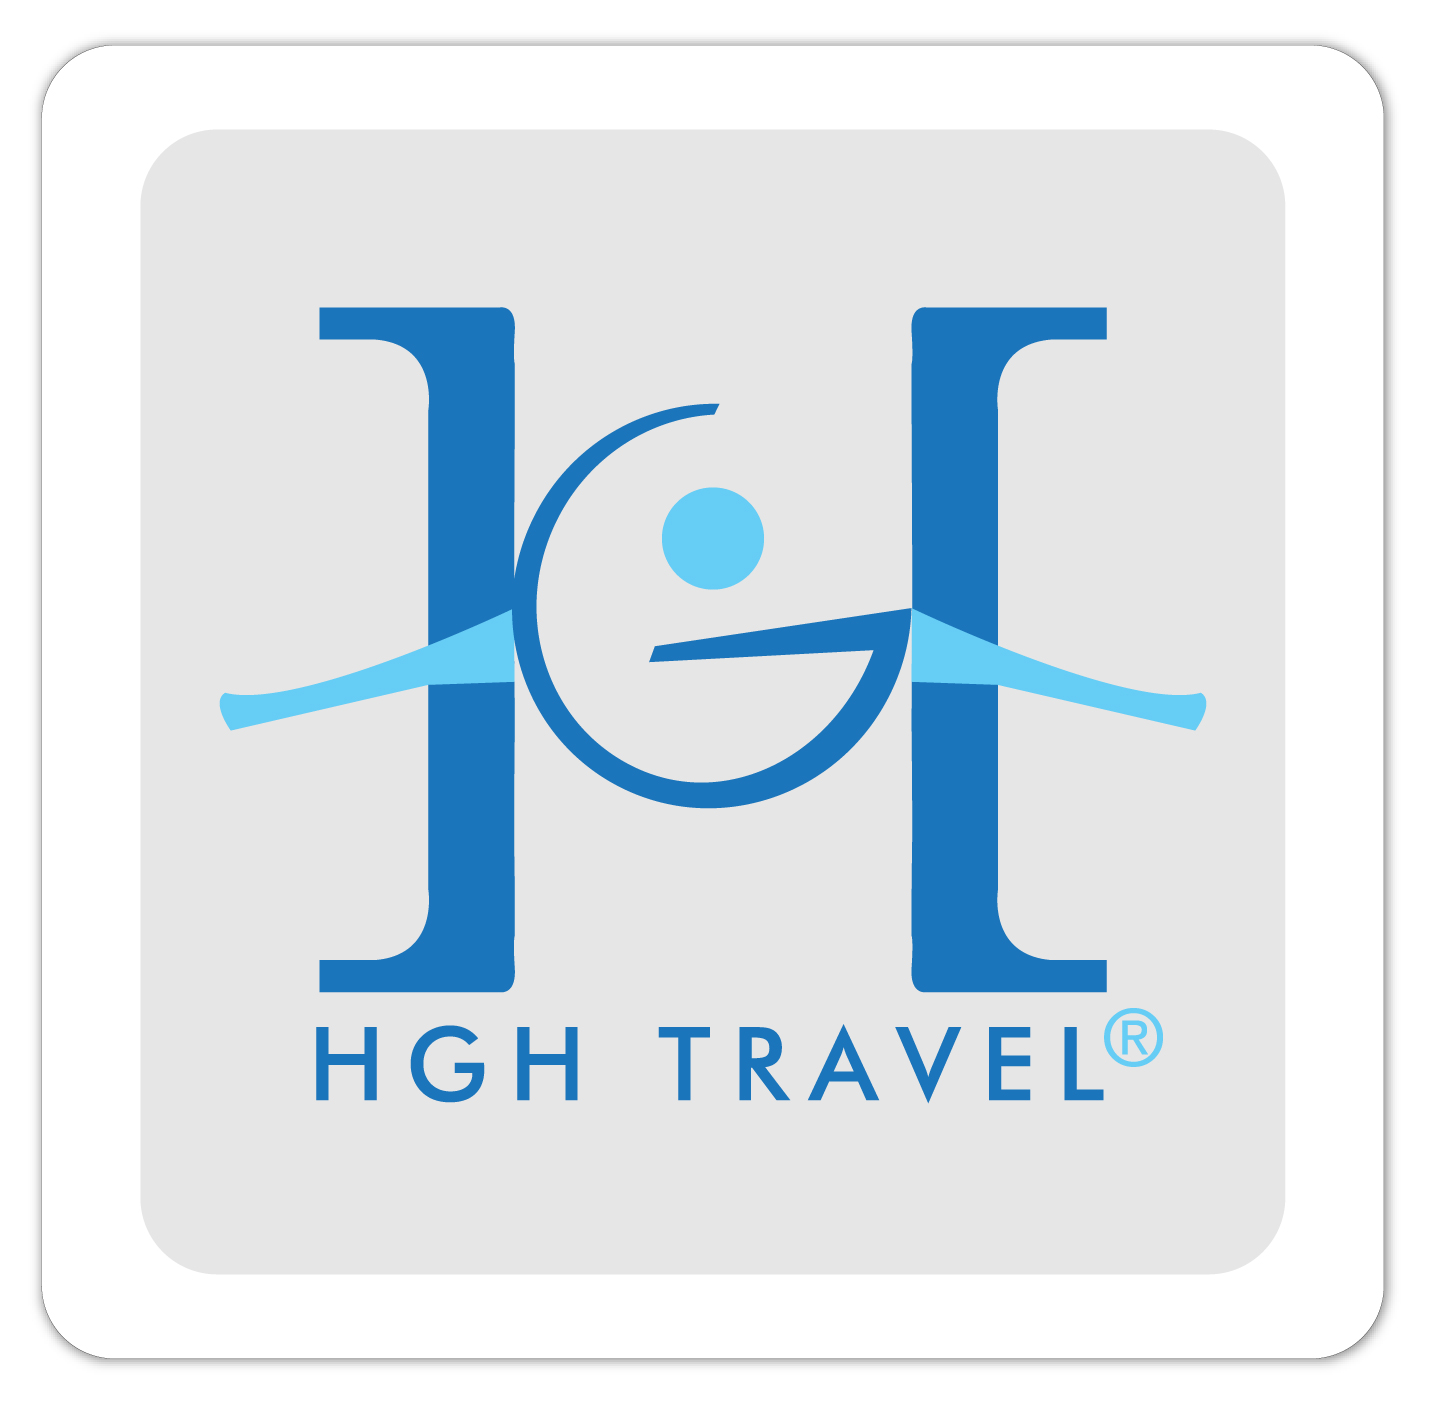 HGH Travel